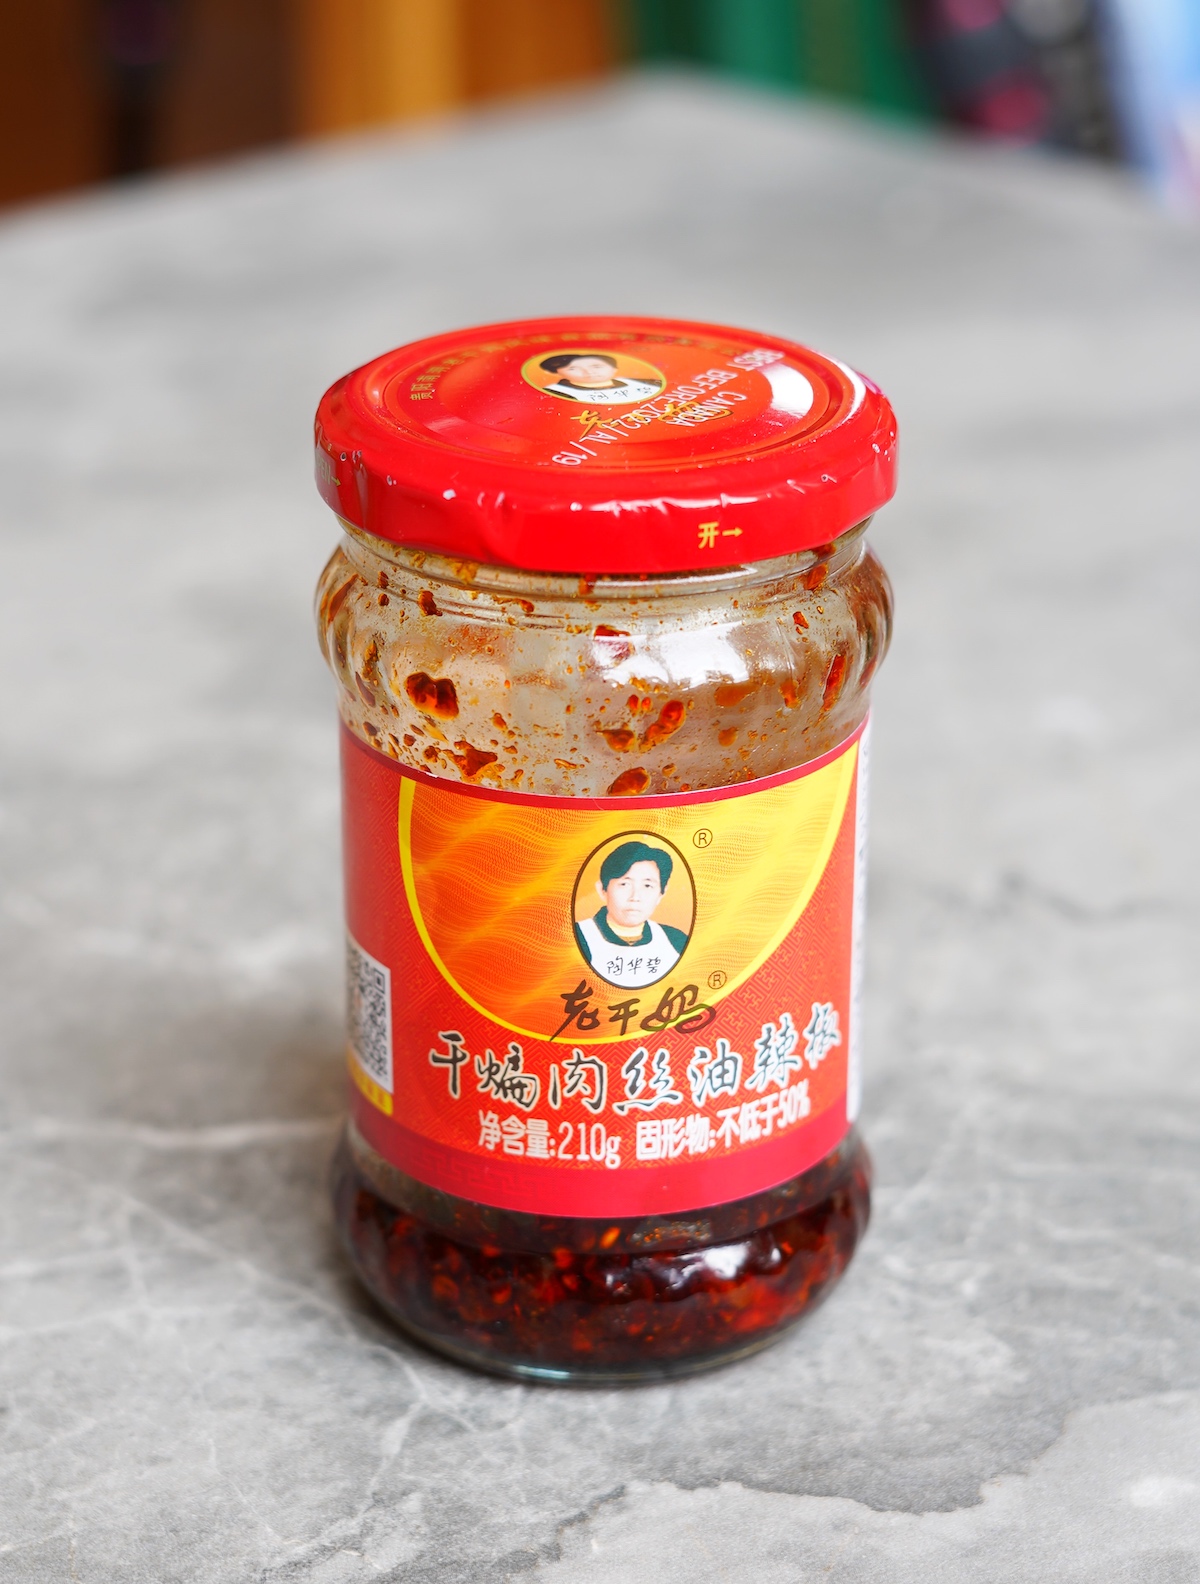 A bottle of Lao Gan Ma chili crisp hot oil.